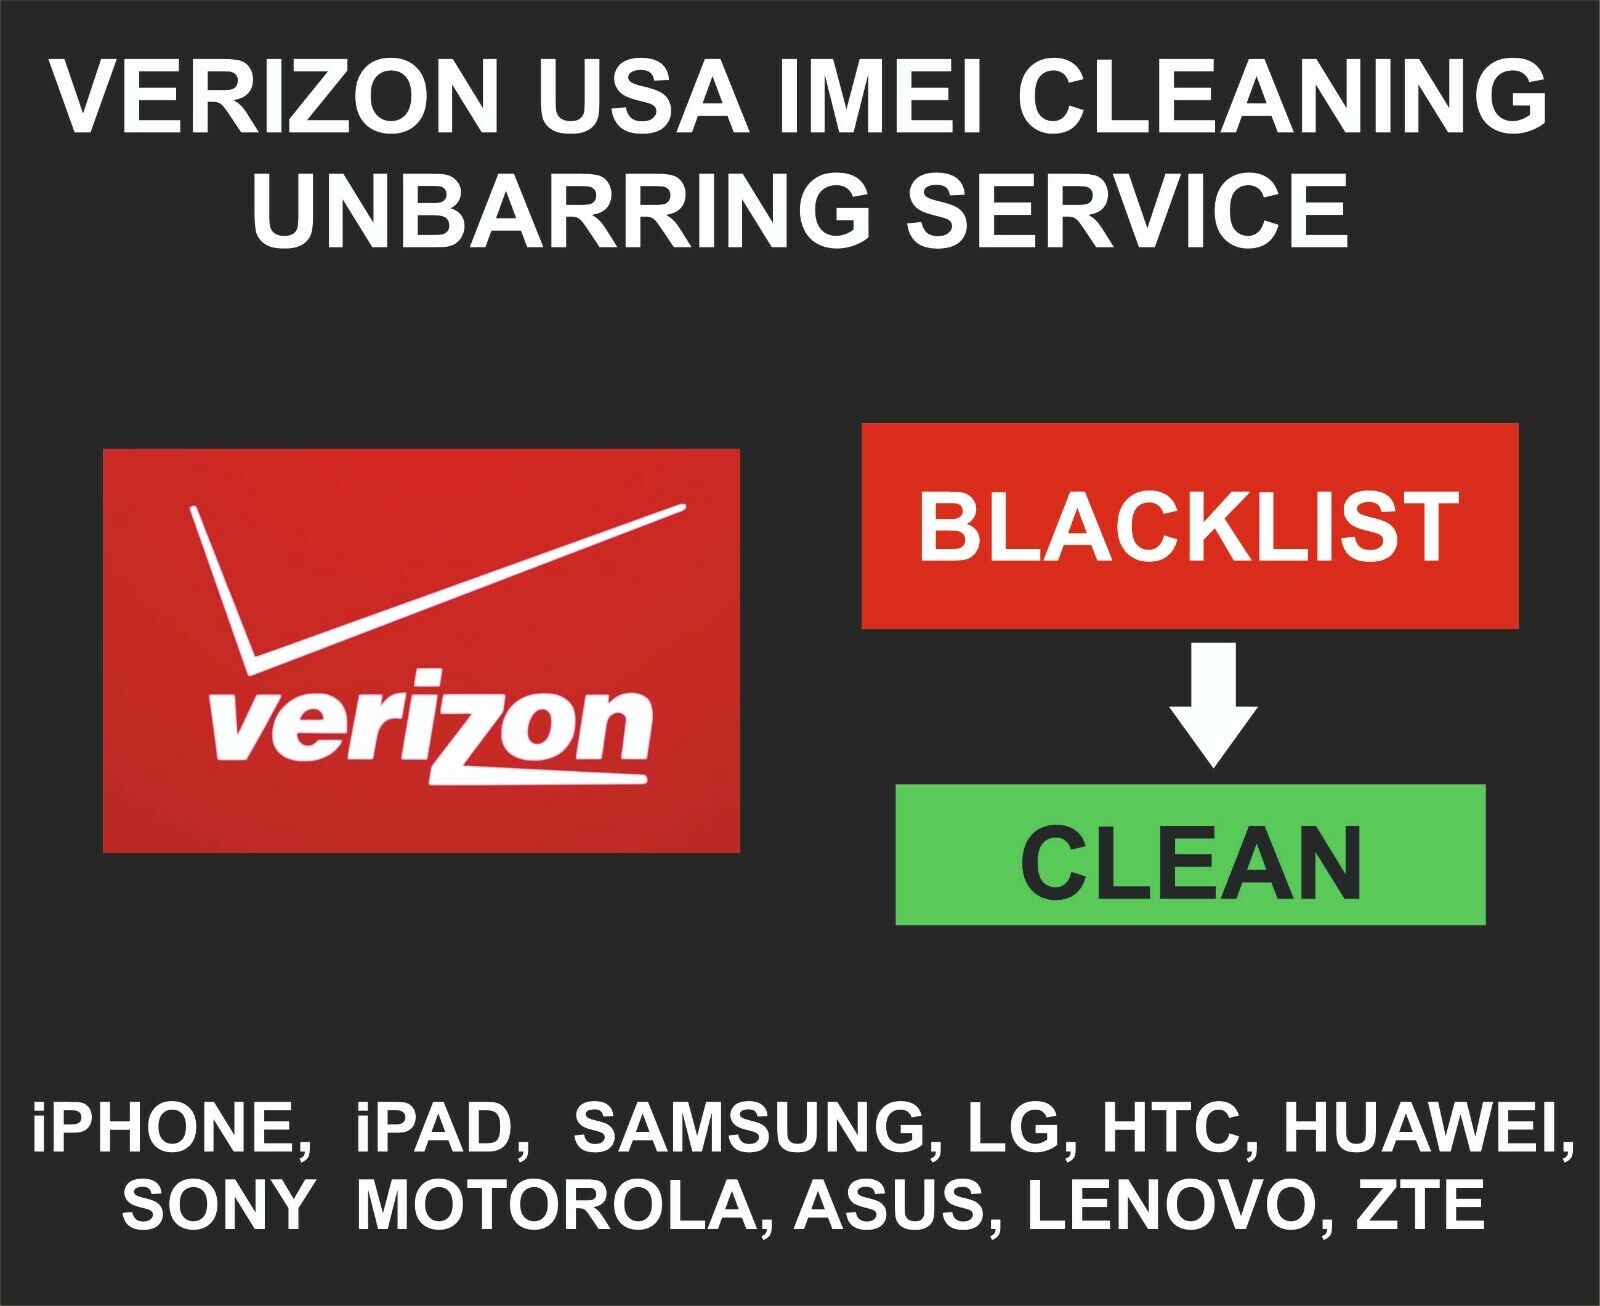 Verizon Usa Imei Cleaning Service, Iphone, Samsung, Lg, Alcatel, Sony, Zte